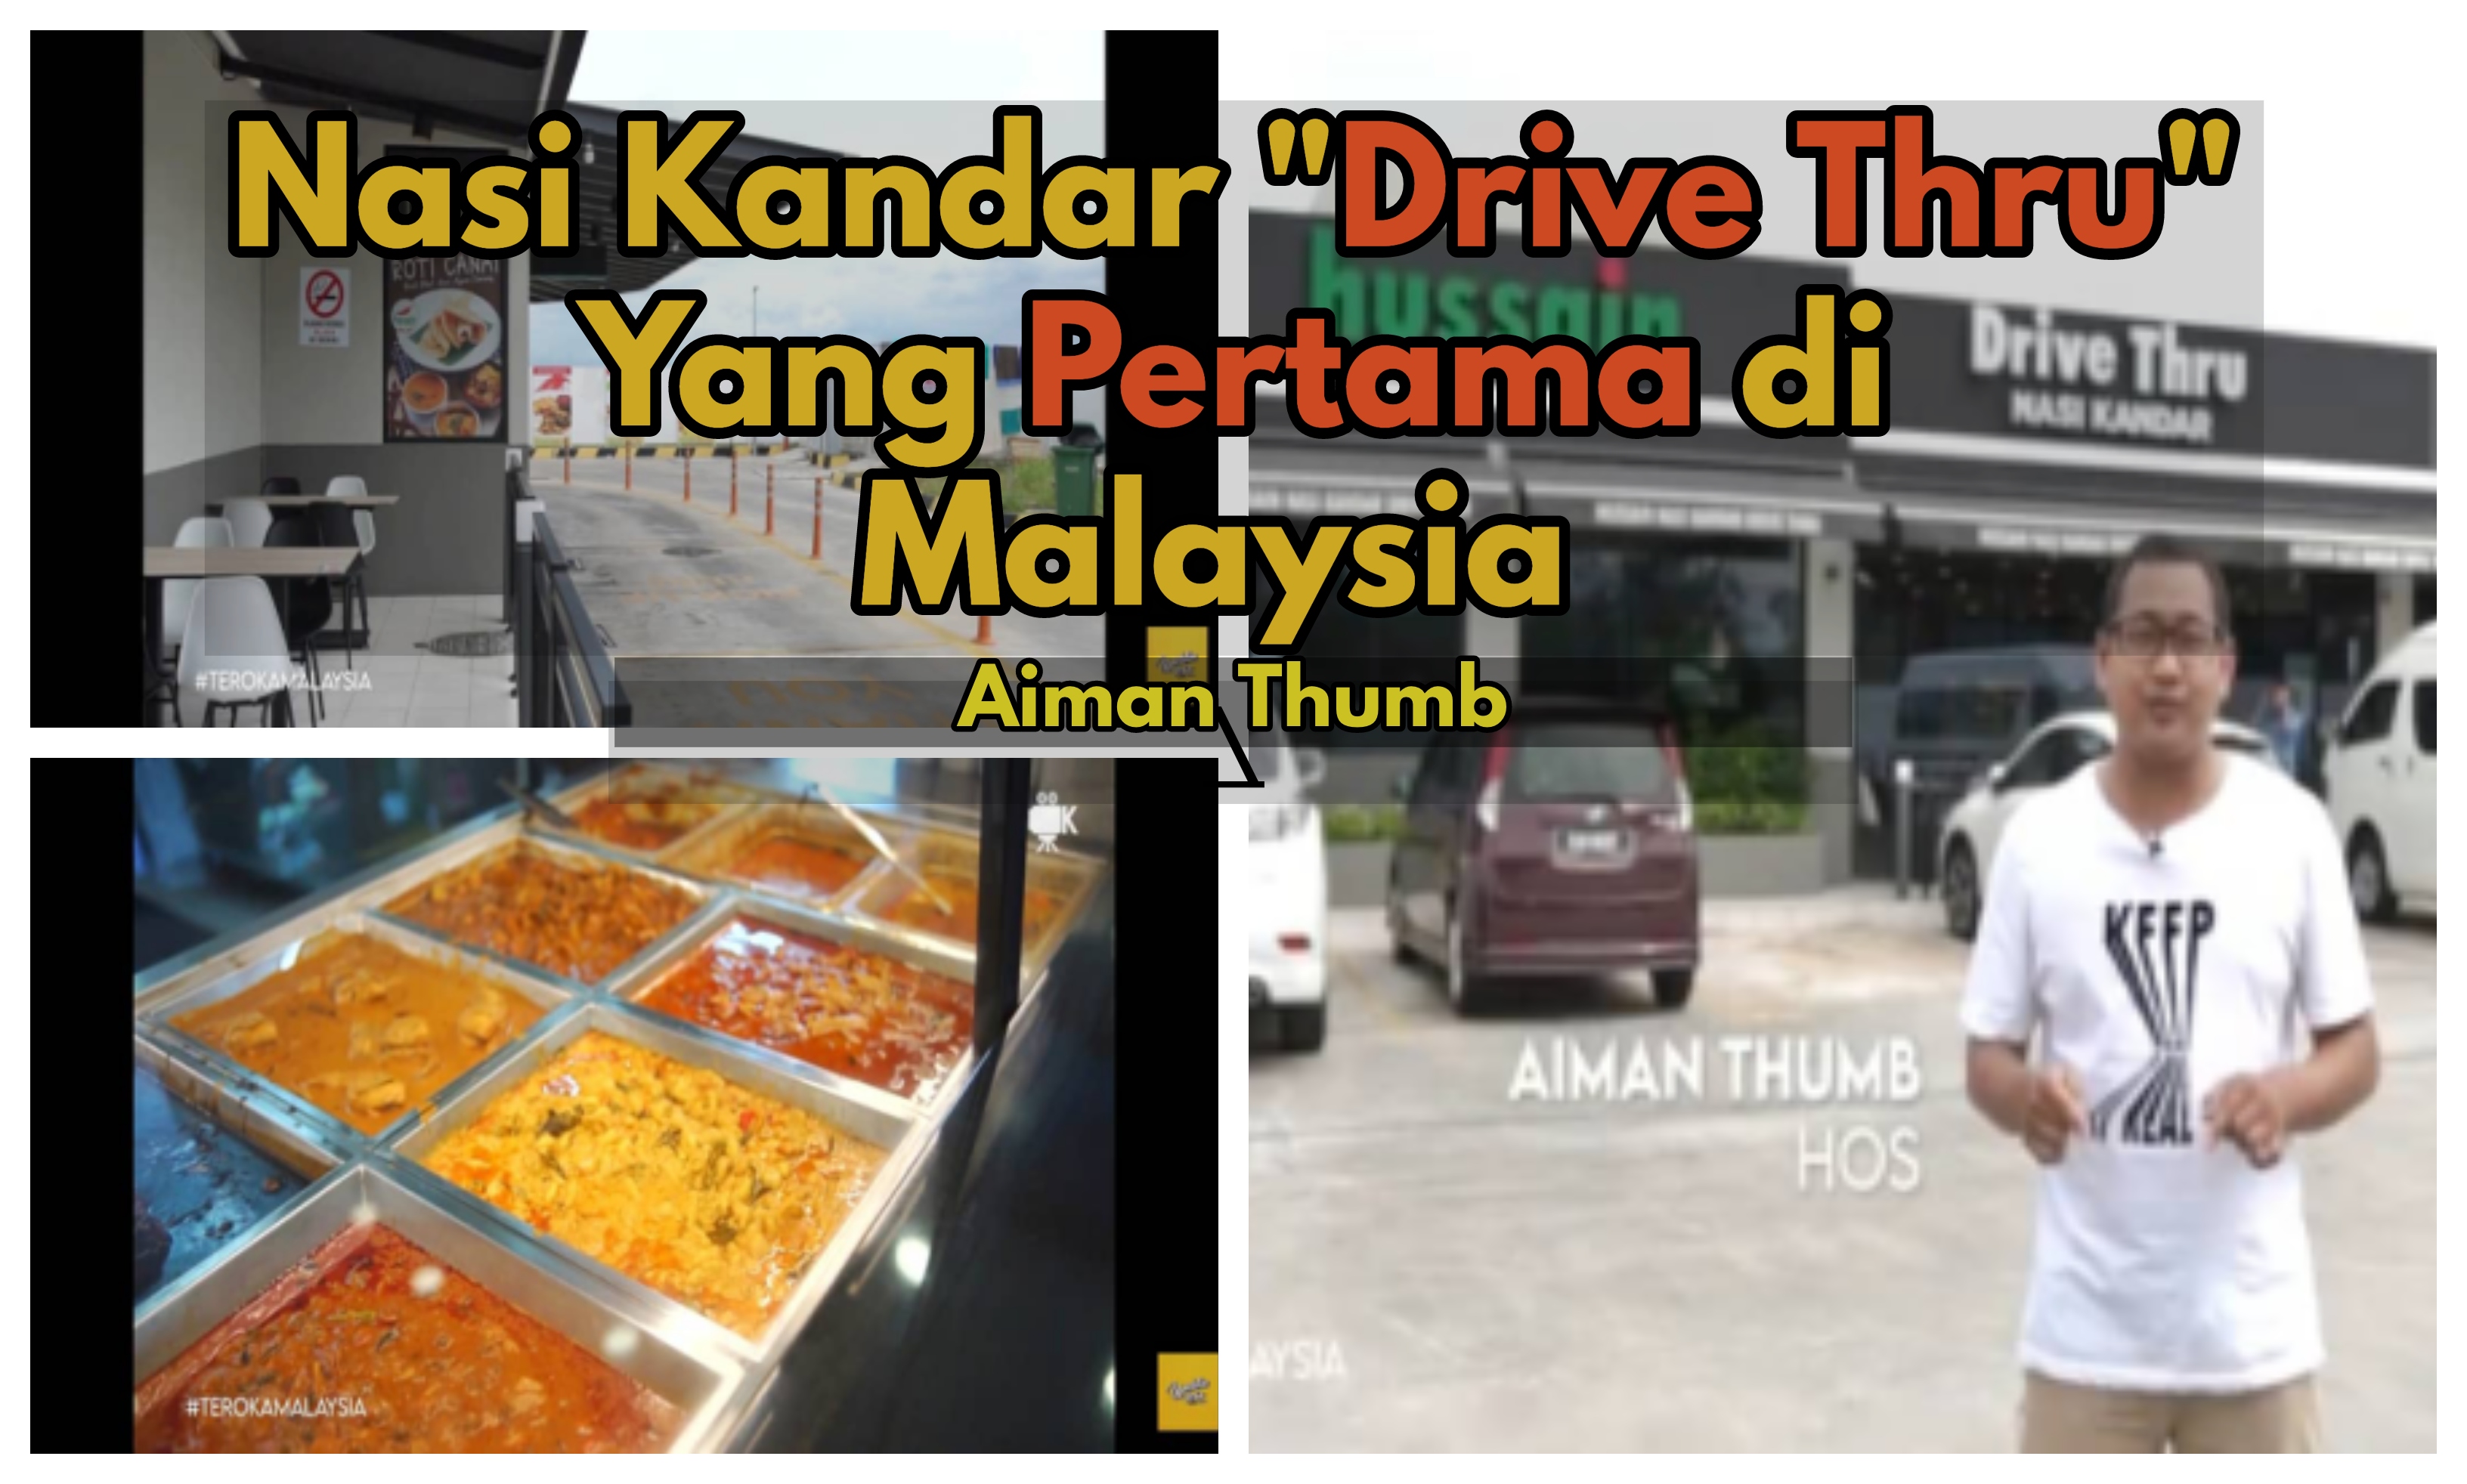 Nasi Kandar "Drive Thru" Yang Pertama di Malaysia? 